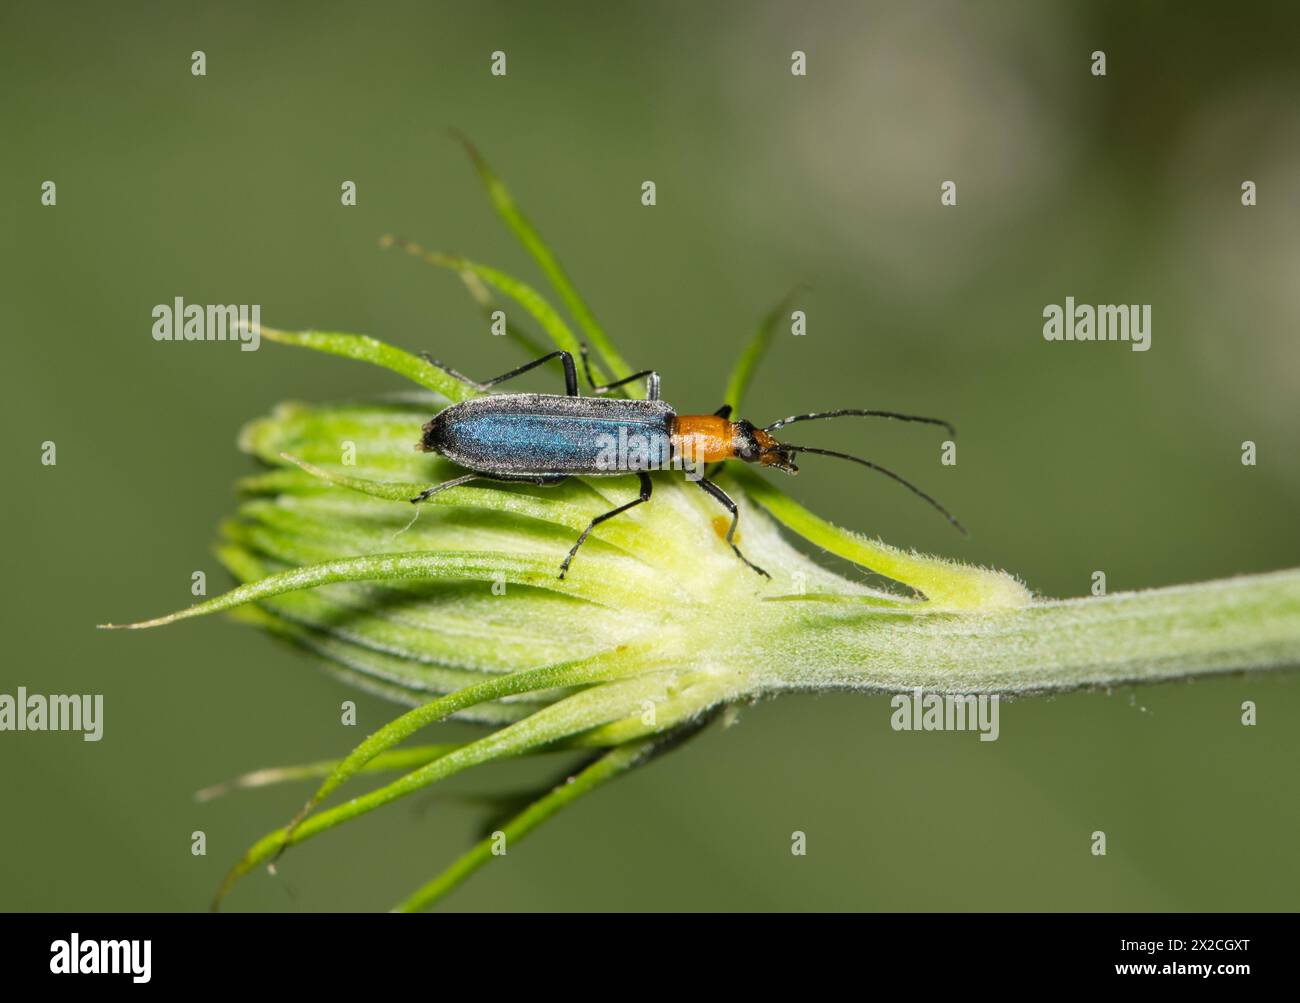 Falsche Blasenkäfer (Heliocis repanda) Insekten auf Blütenknospen, Natur Frühjahrsbekämpfung Landwirtschaft. Stockfoto